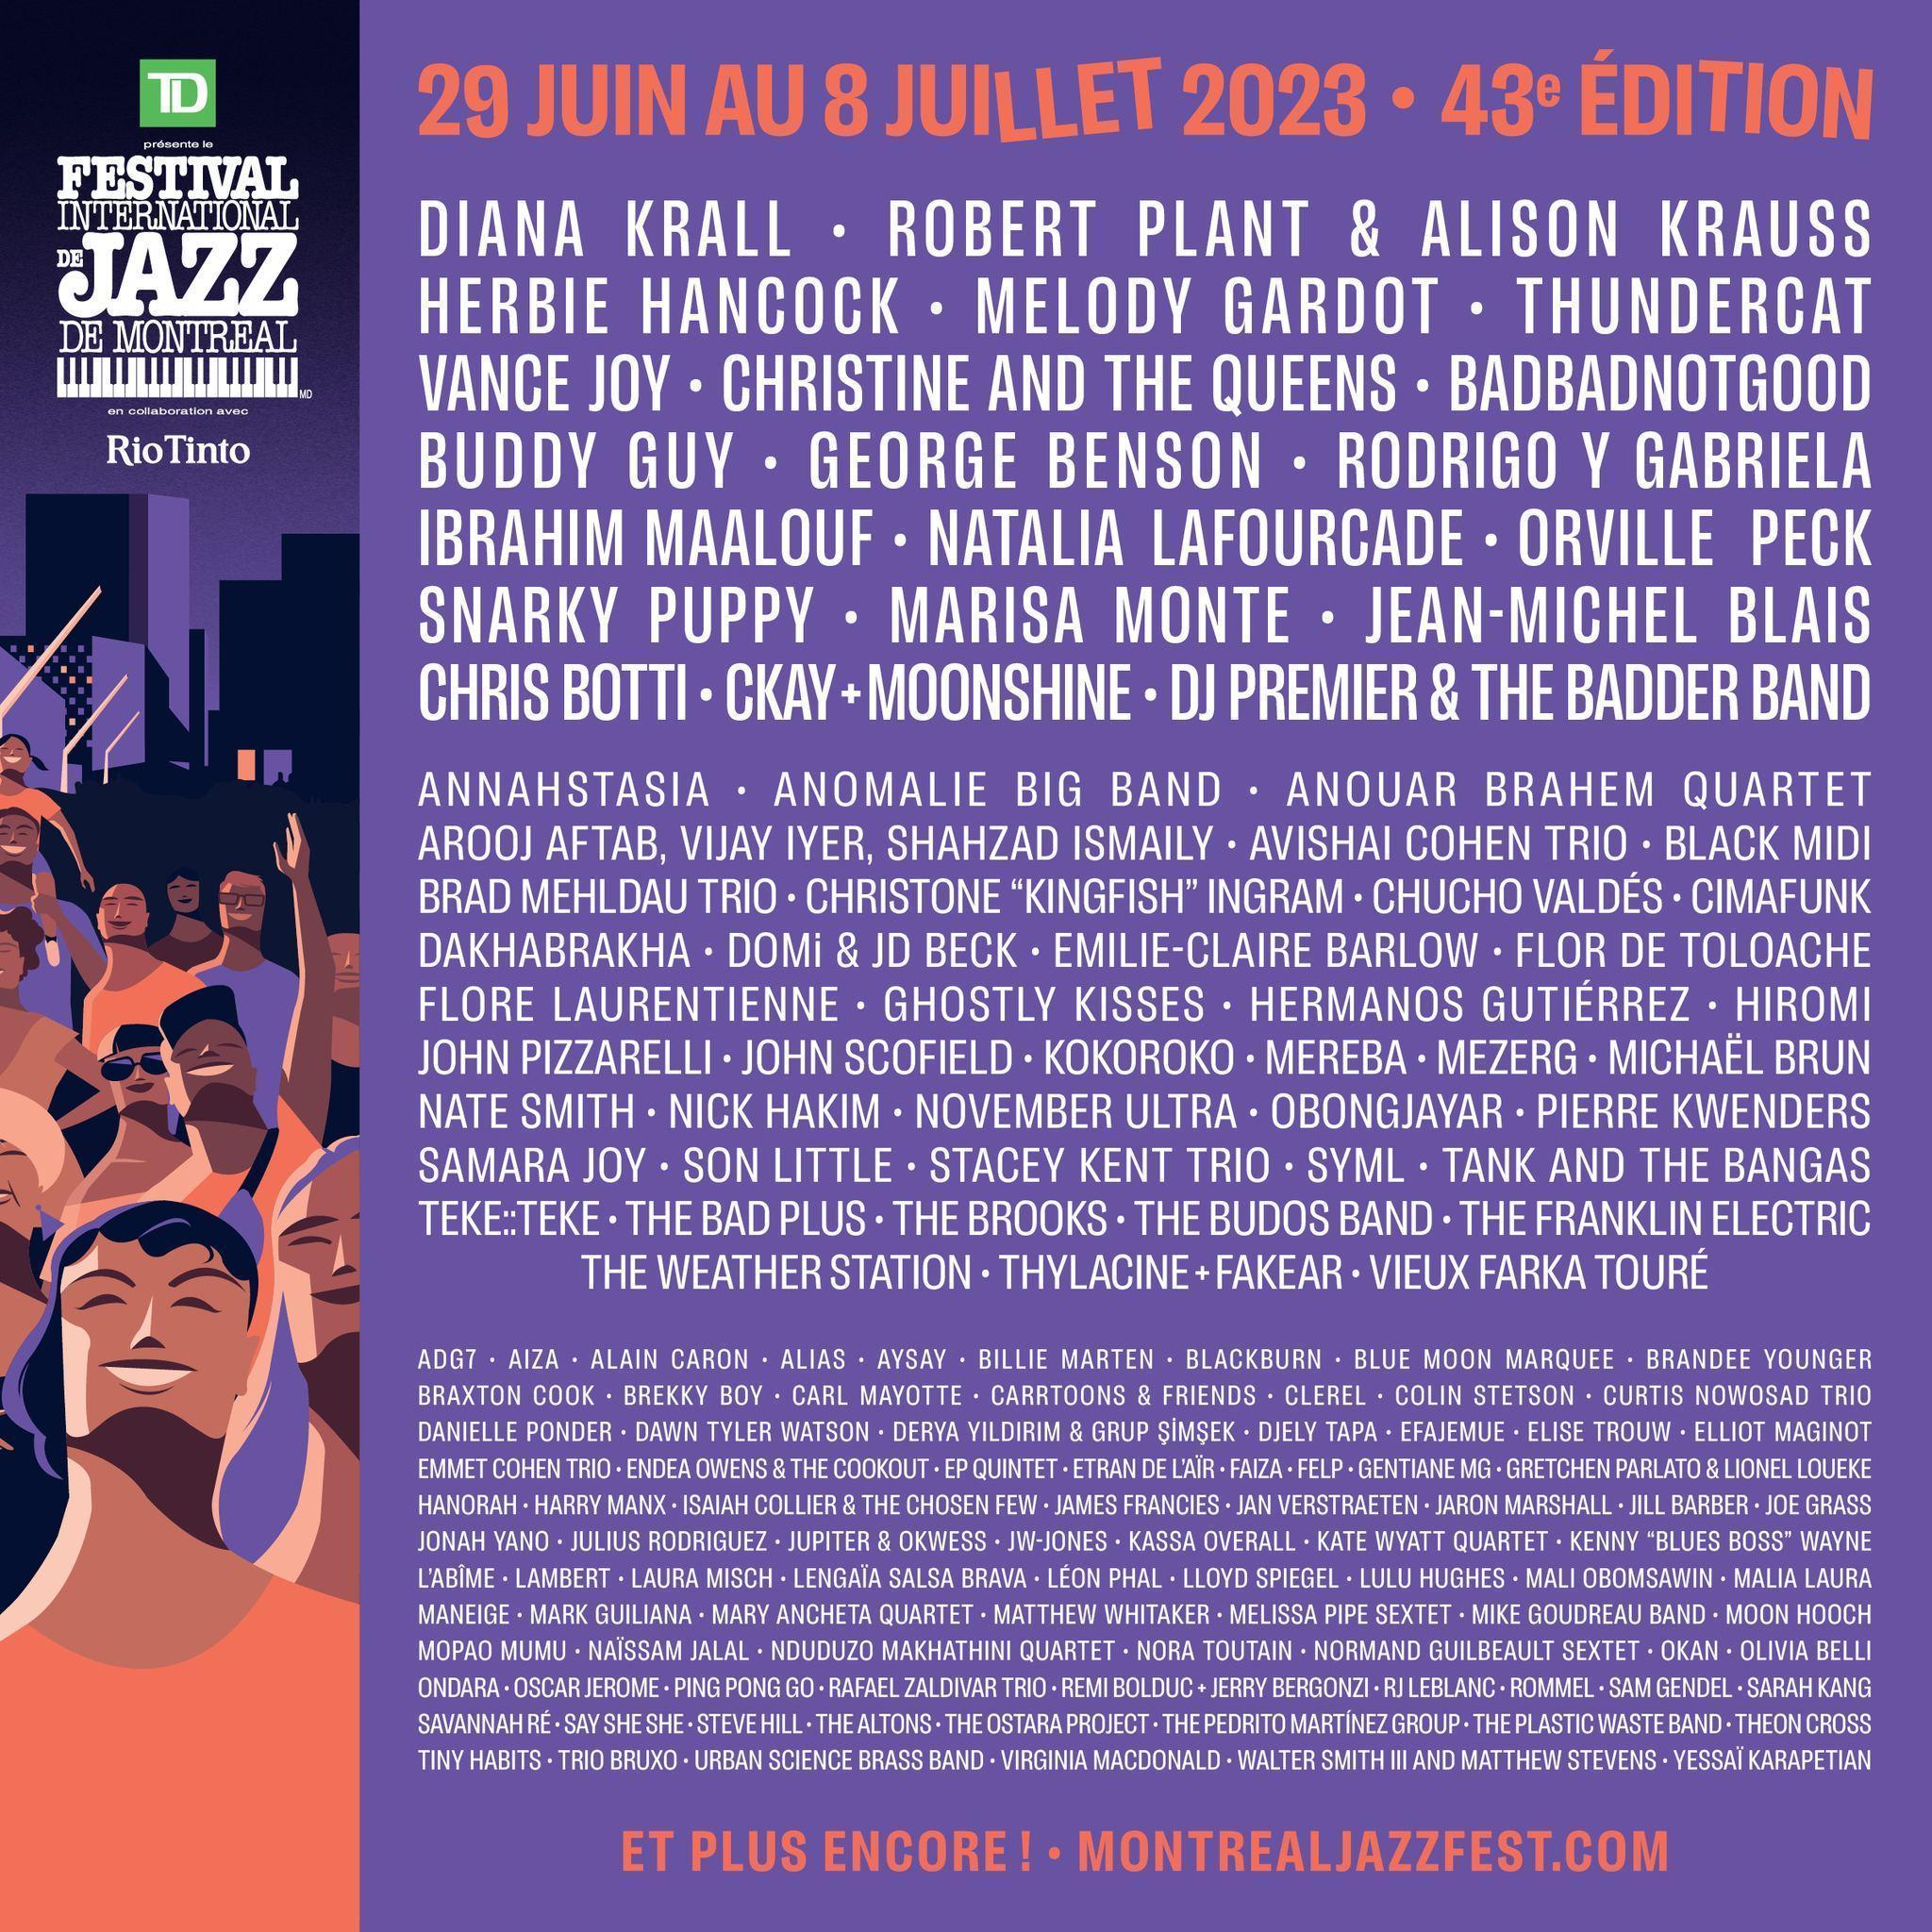 Le Festival international de Jazz